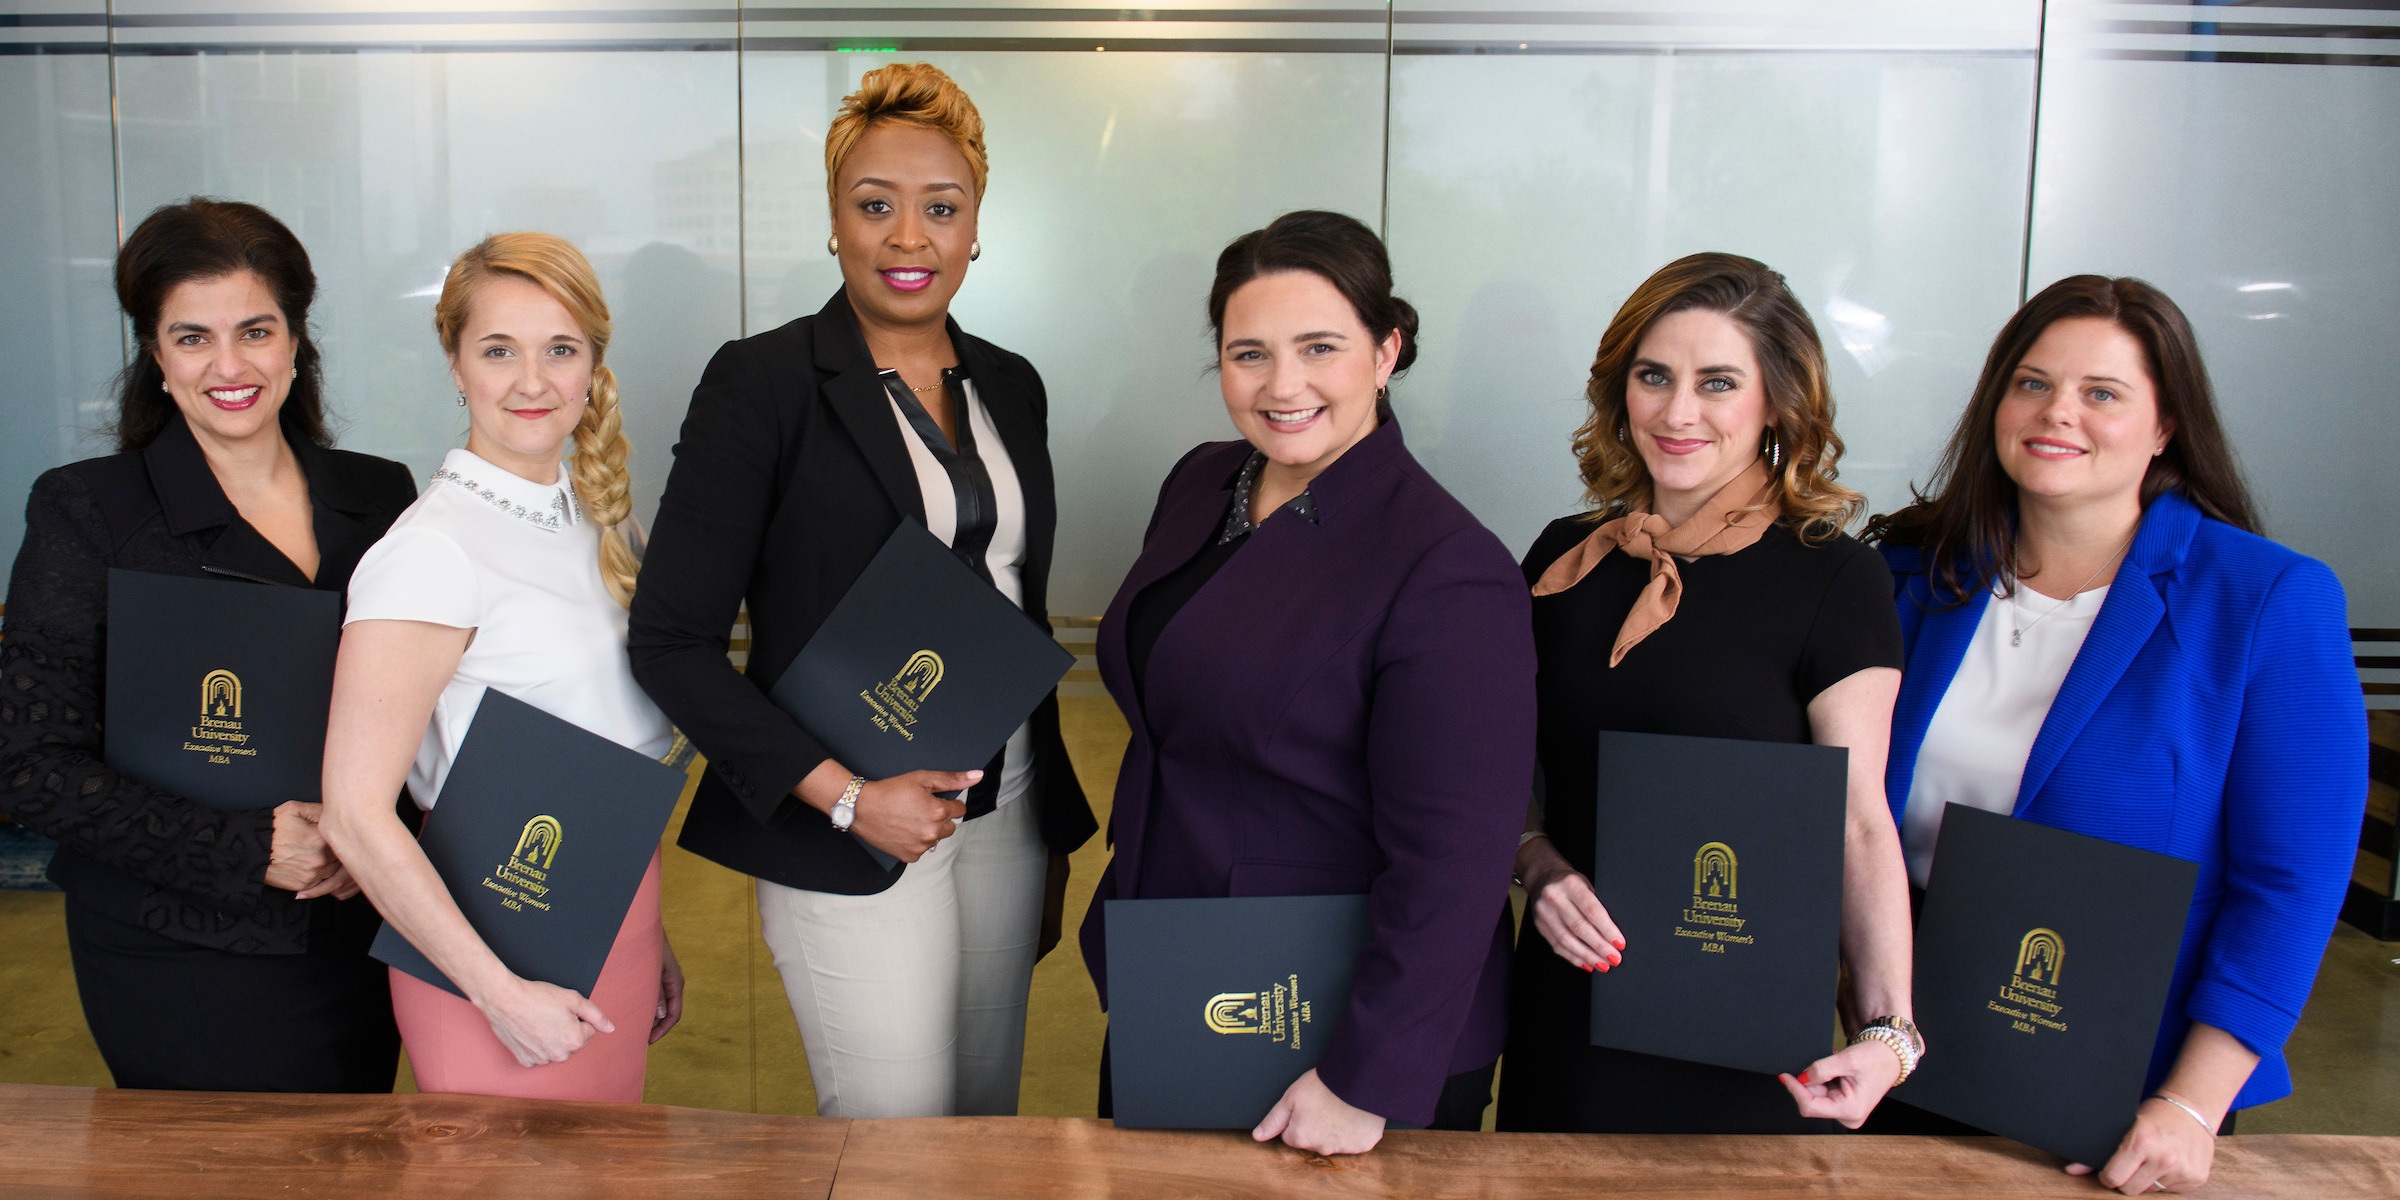 Row of professional, women executives holding folders with Brenau logo